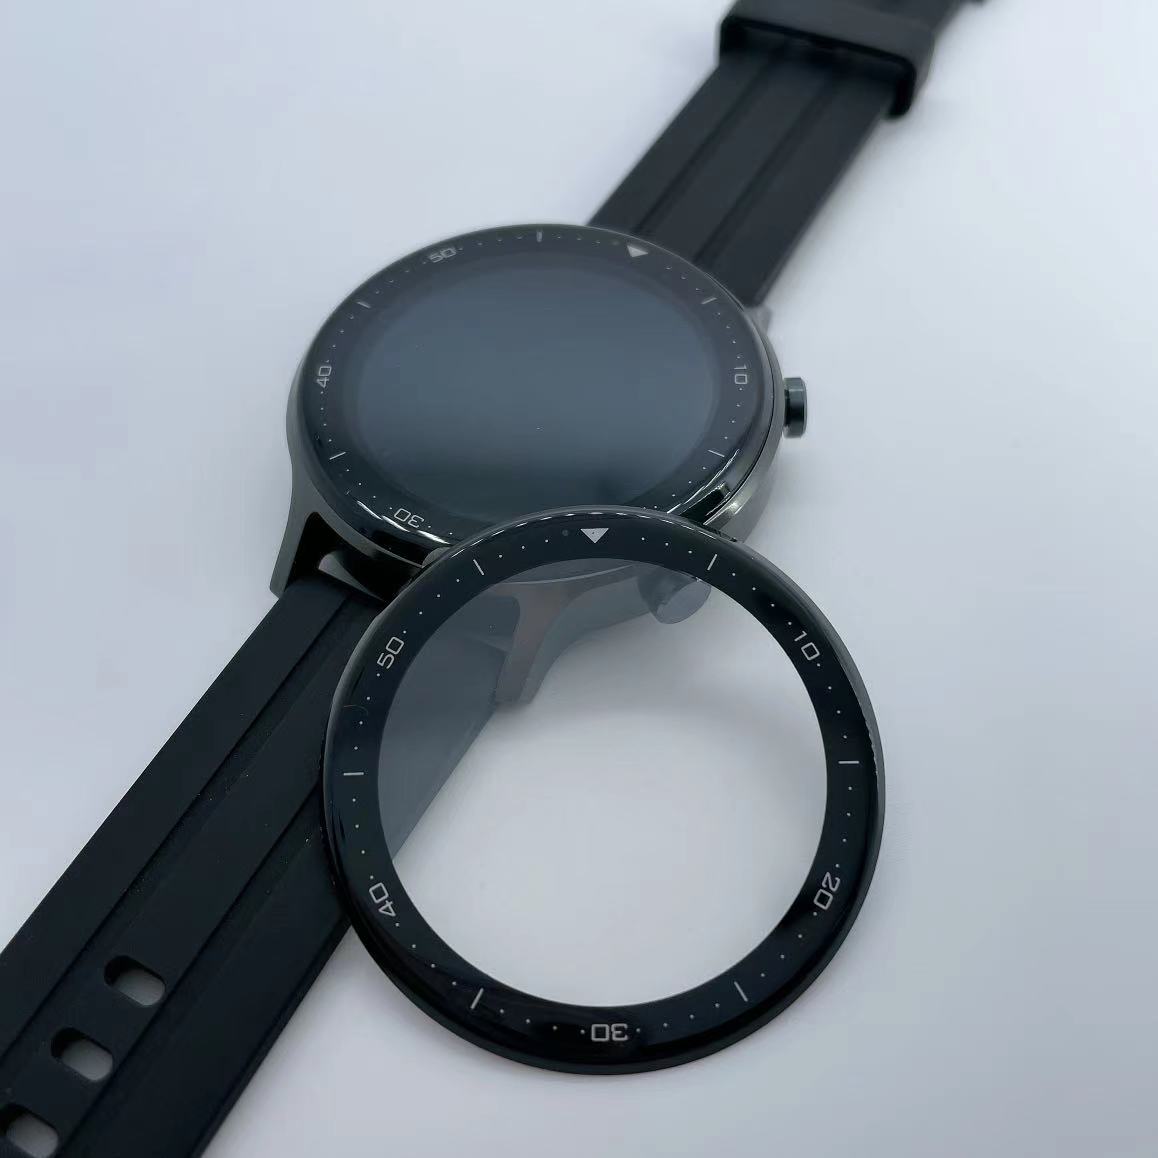 Behua Scherm Beschermende Film Voor Realme Horloge S Horloge Clear 3D Zachte Transparante Film Ultra-Dunne Full Cover Accessoires gebogen